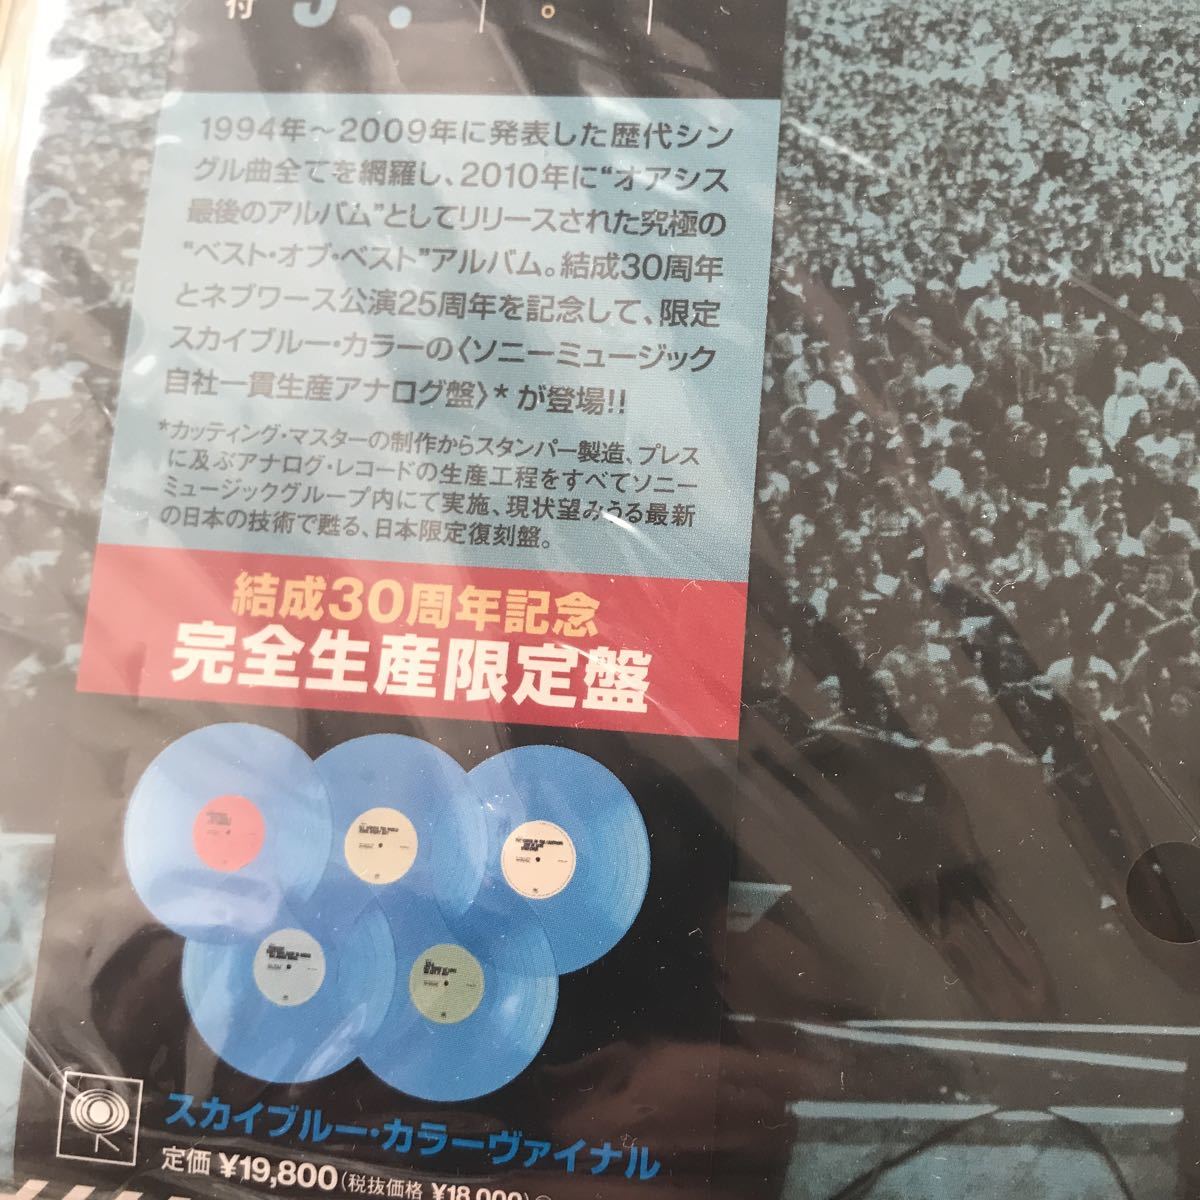 Oasis [Time Flies...1994-2009] 5LP Япония ограничение Japan Only Sky Blue